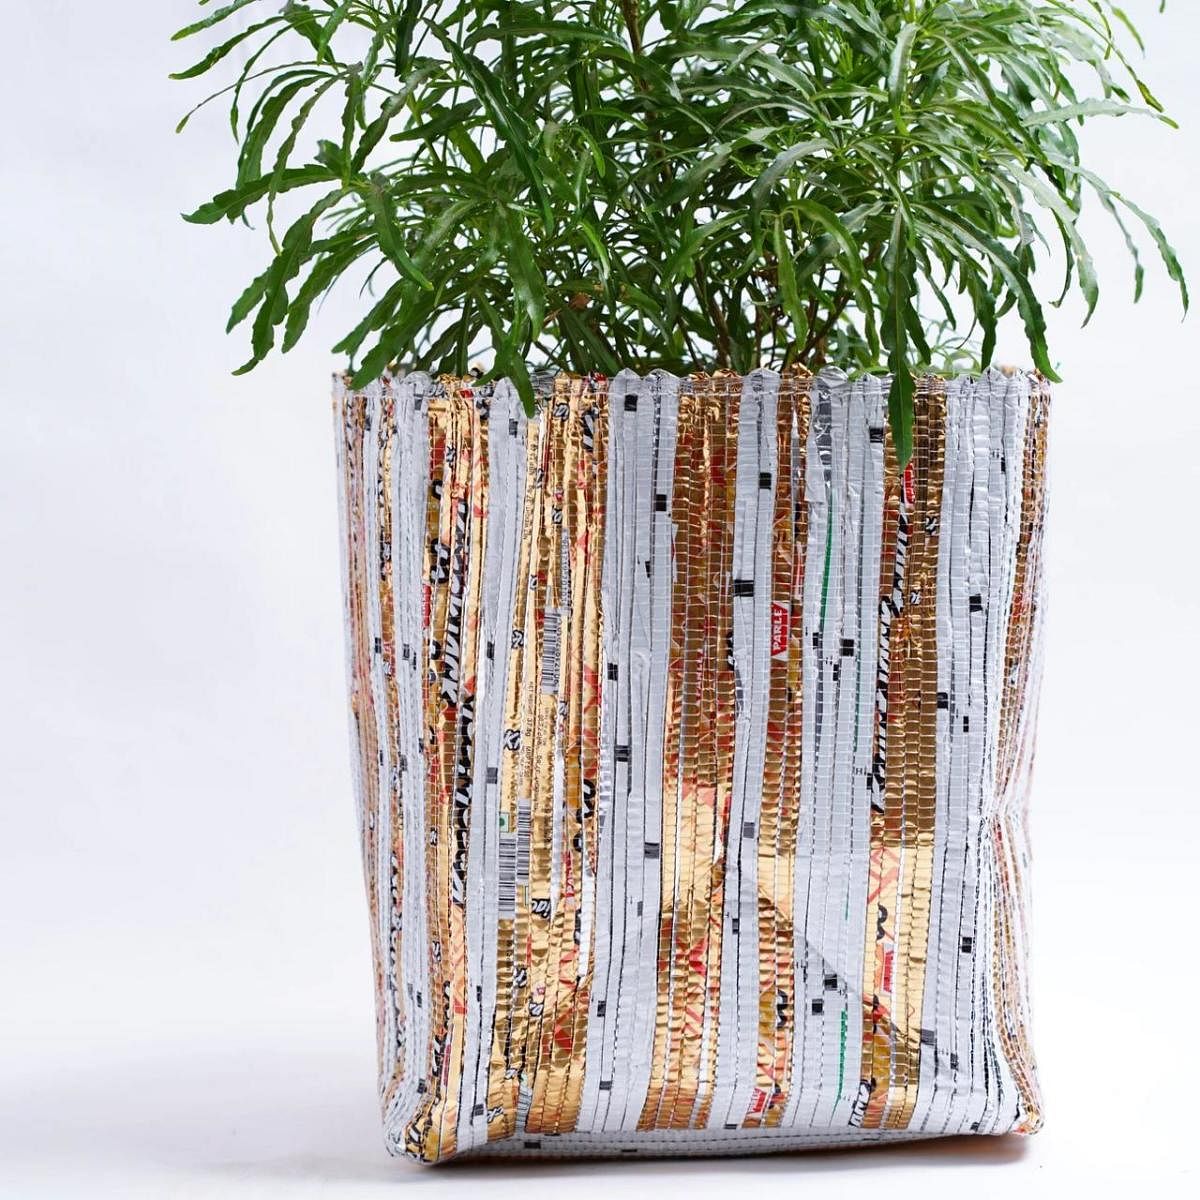 An upcycled handwoven planter by EcoKaari